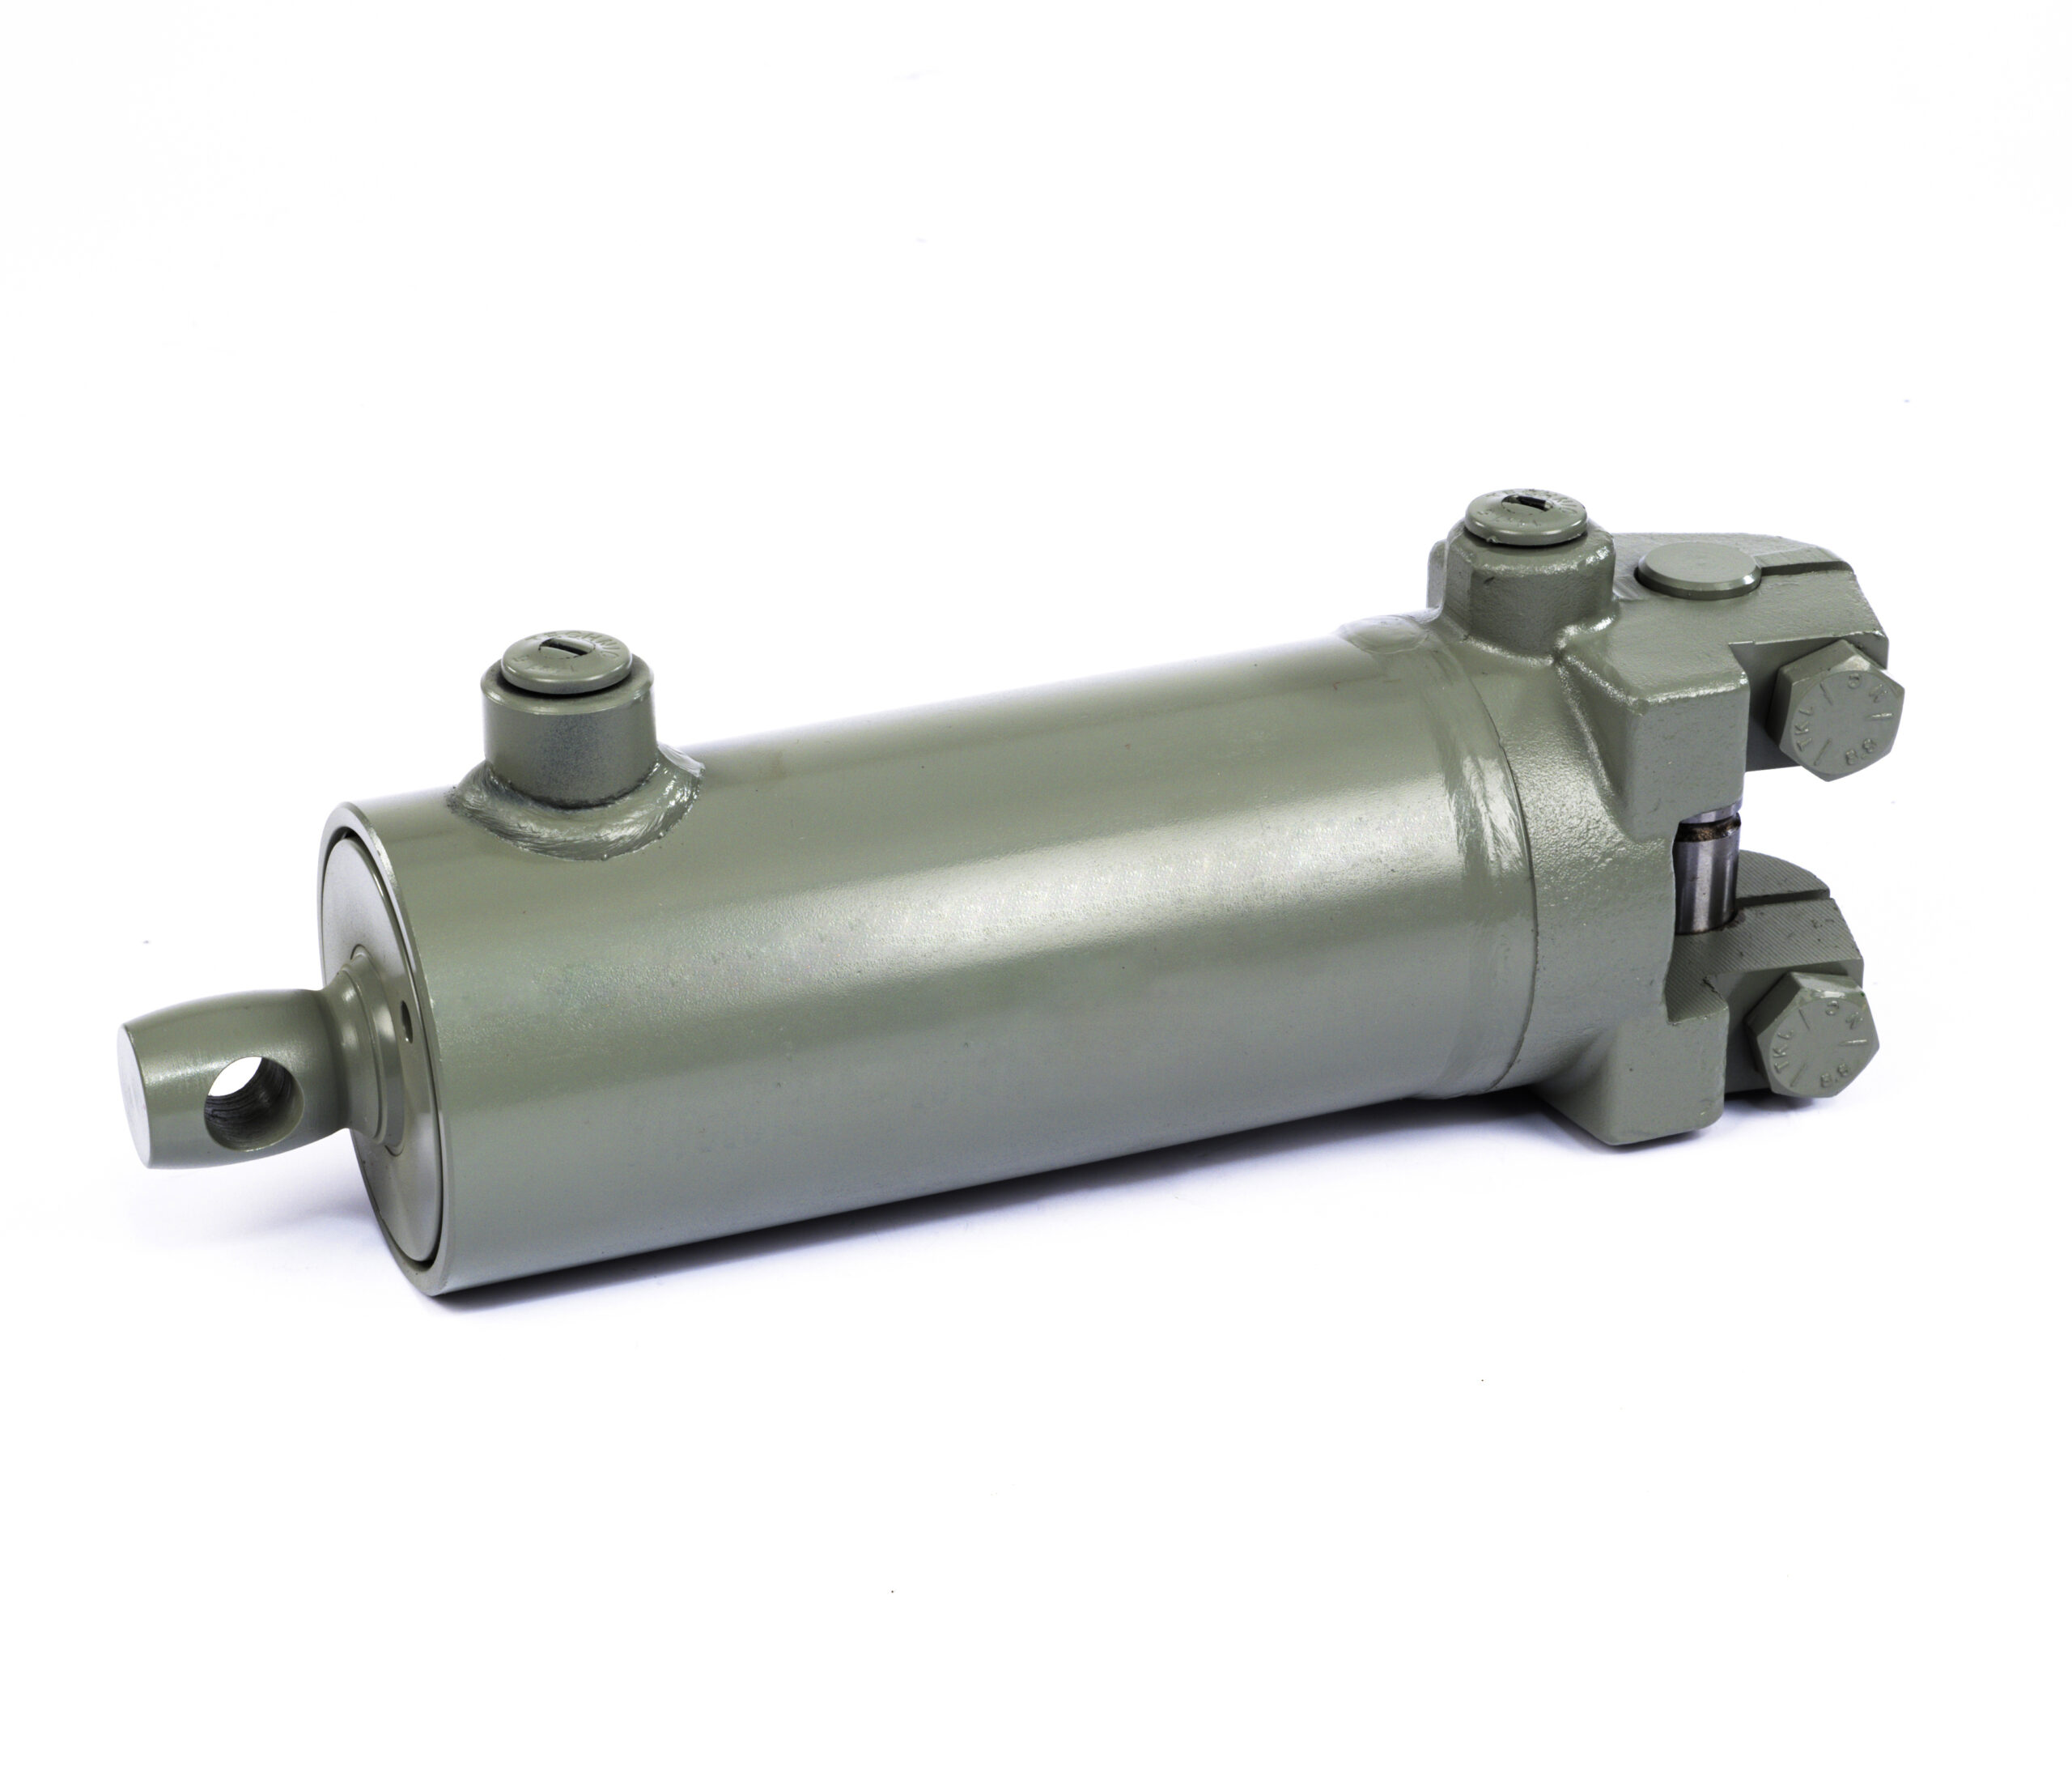 3773711M91 1605121M92 532193M91 – Power Steering Cylinder for Massey Ferguson